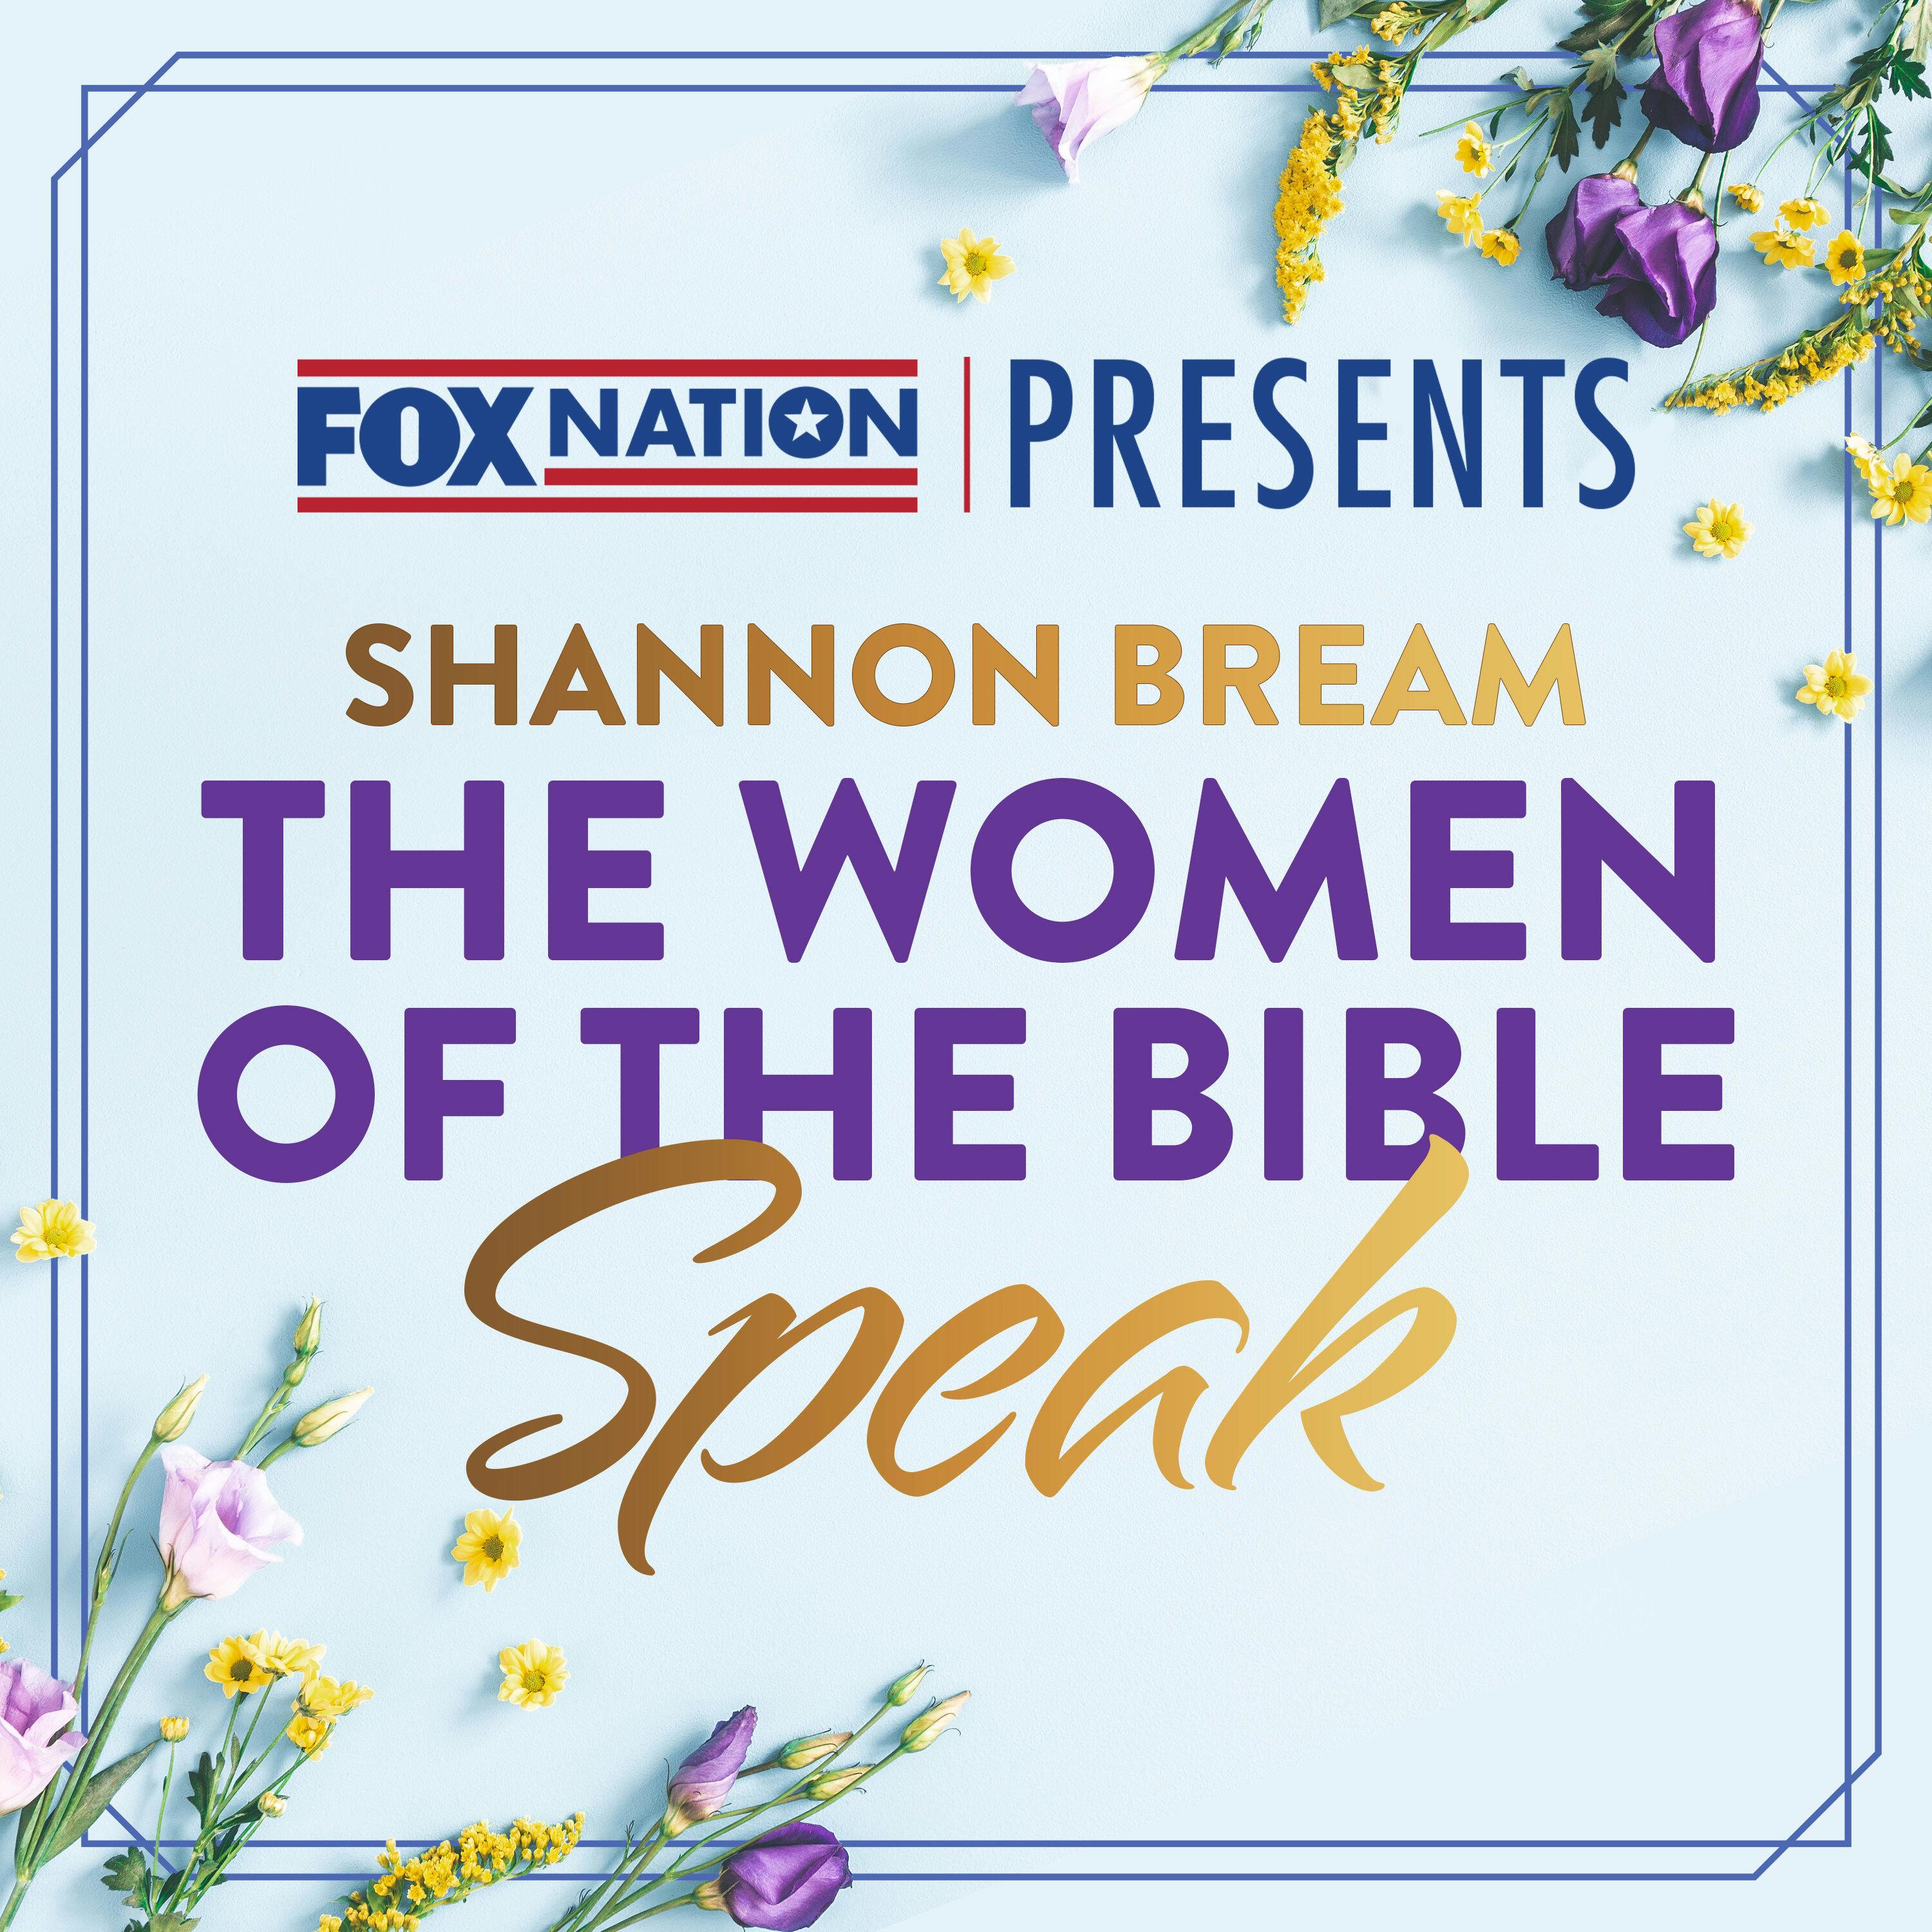 Fox Nation Presents: The Women of the Bible Speak